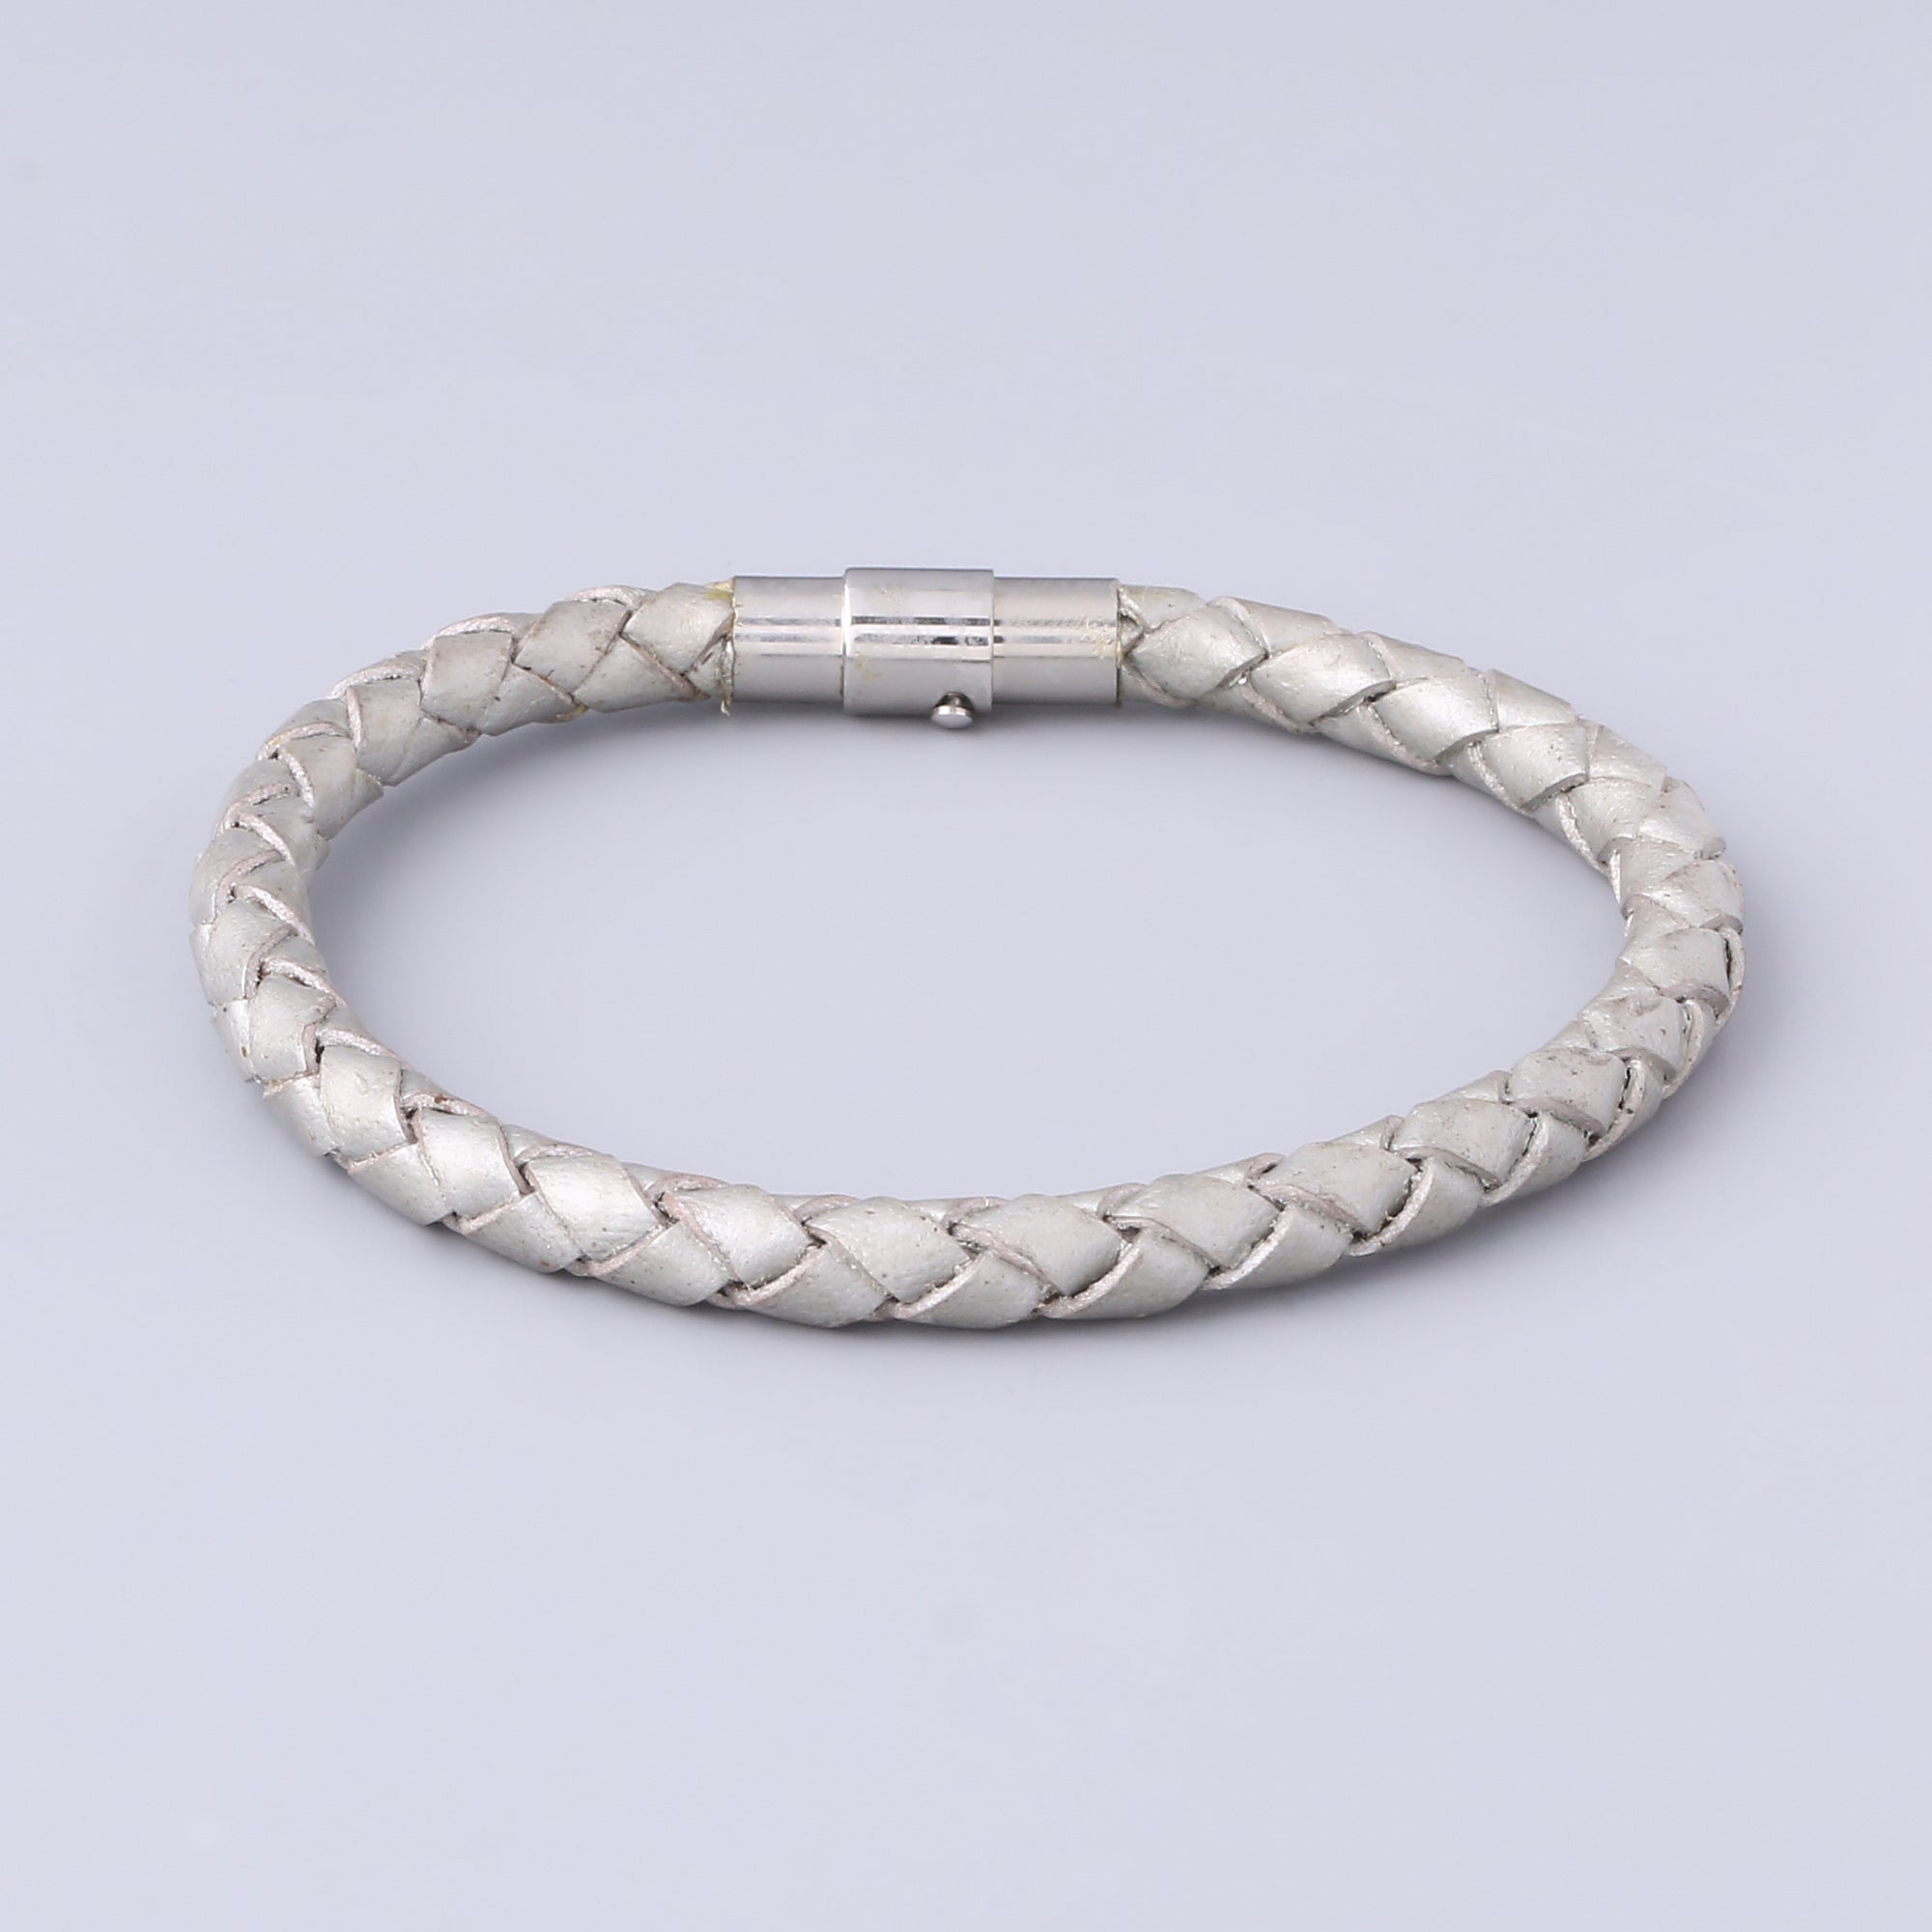 Braided Silver Leather Bracelet